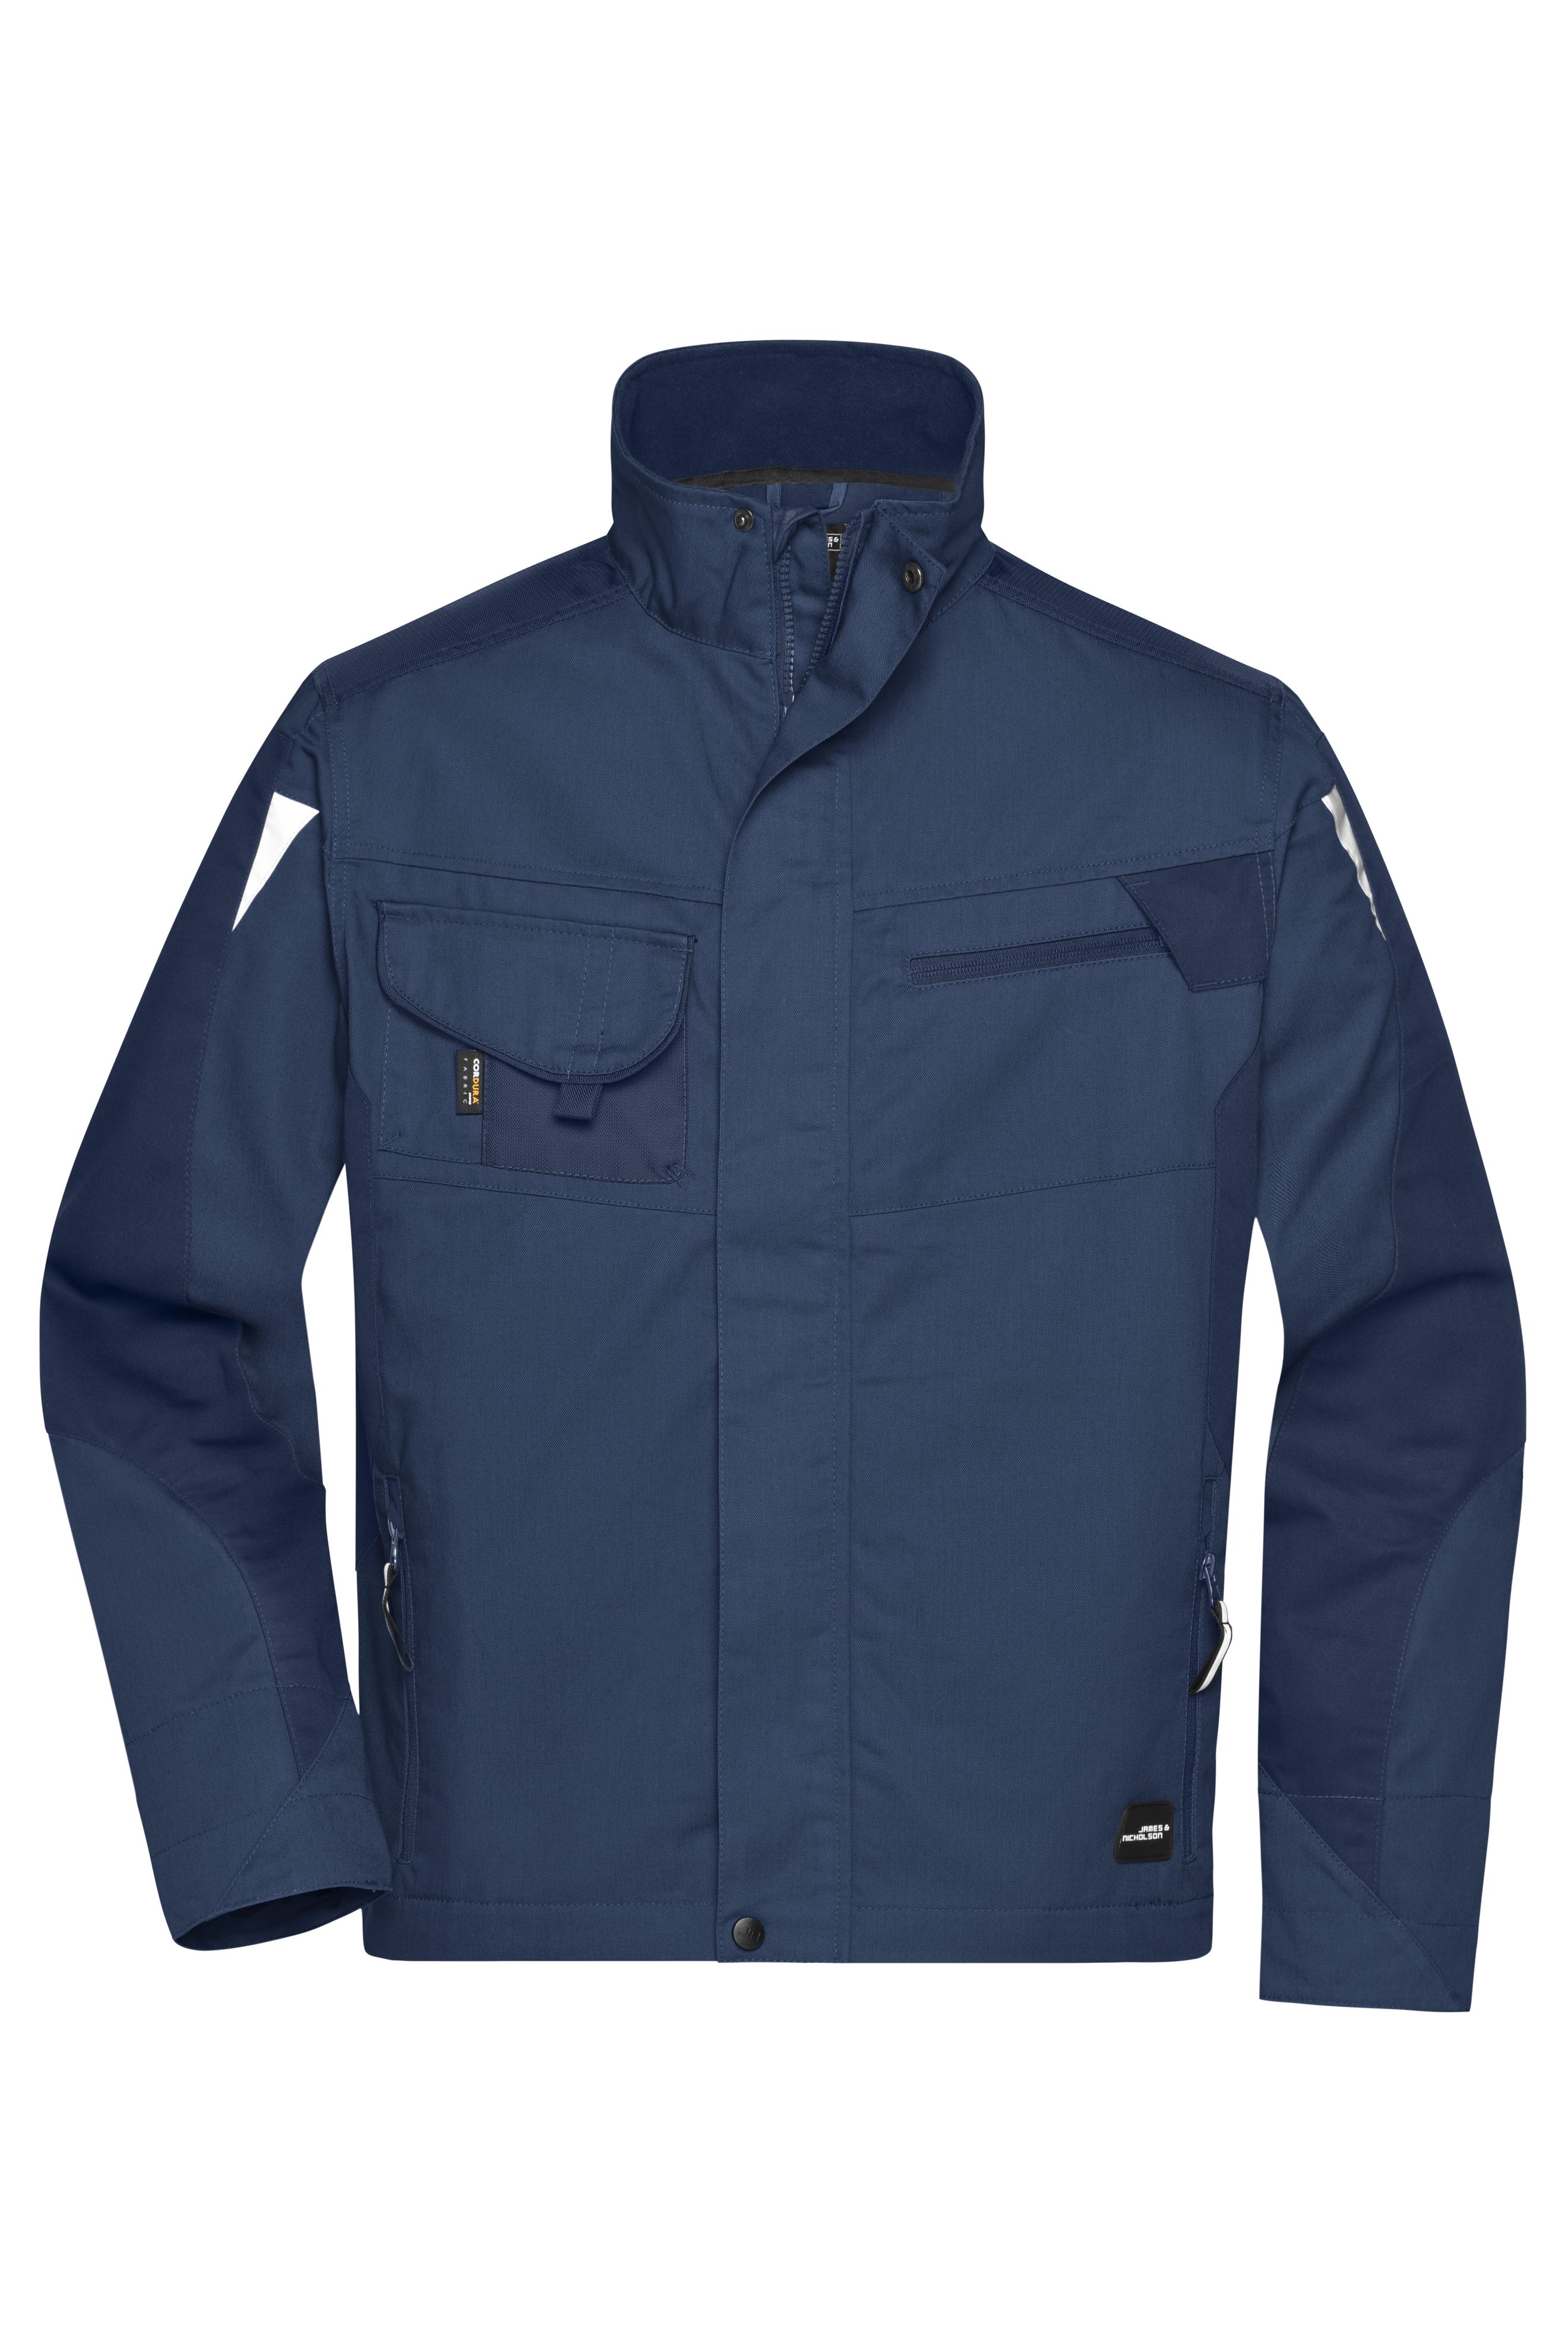 Unisex Workwear Jacke Strong James & Nicholson® Navy 6XL